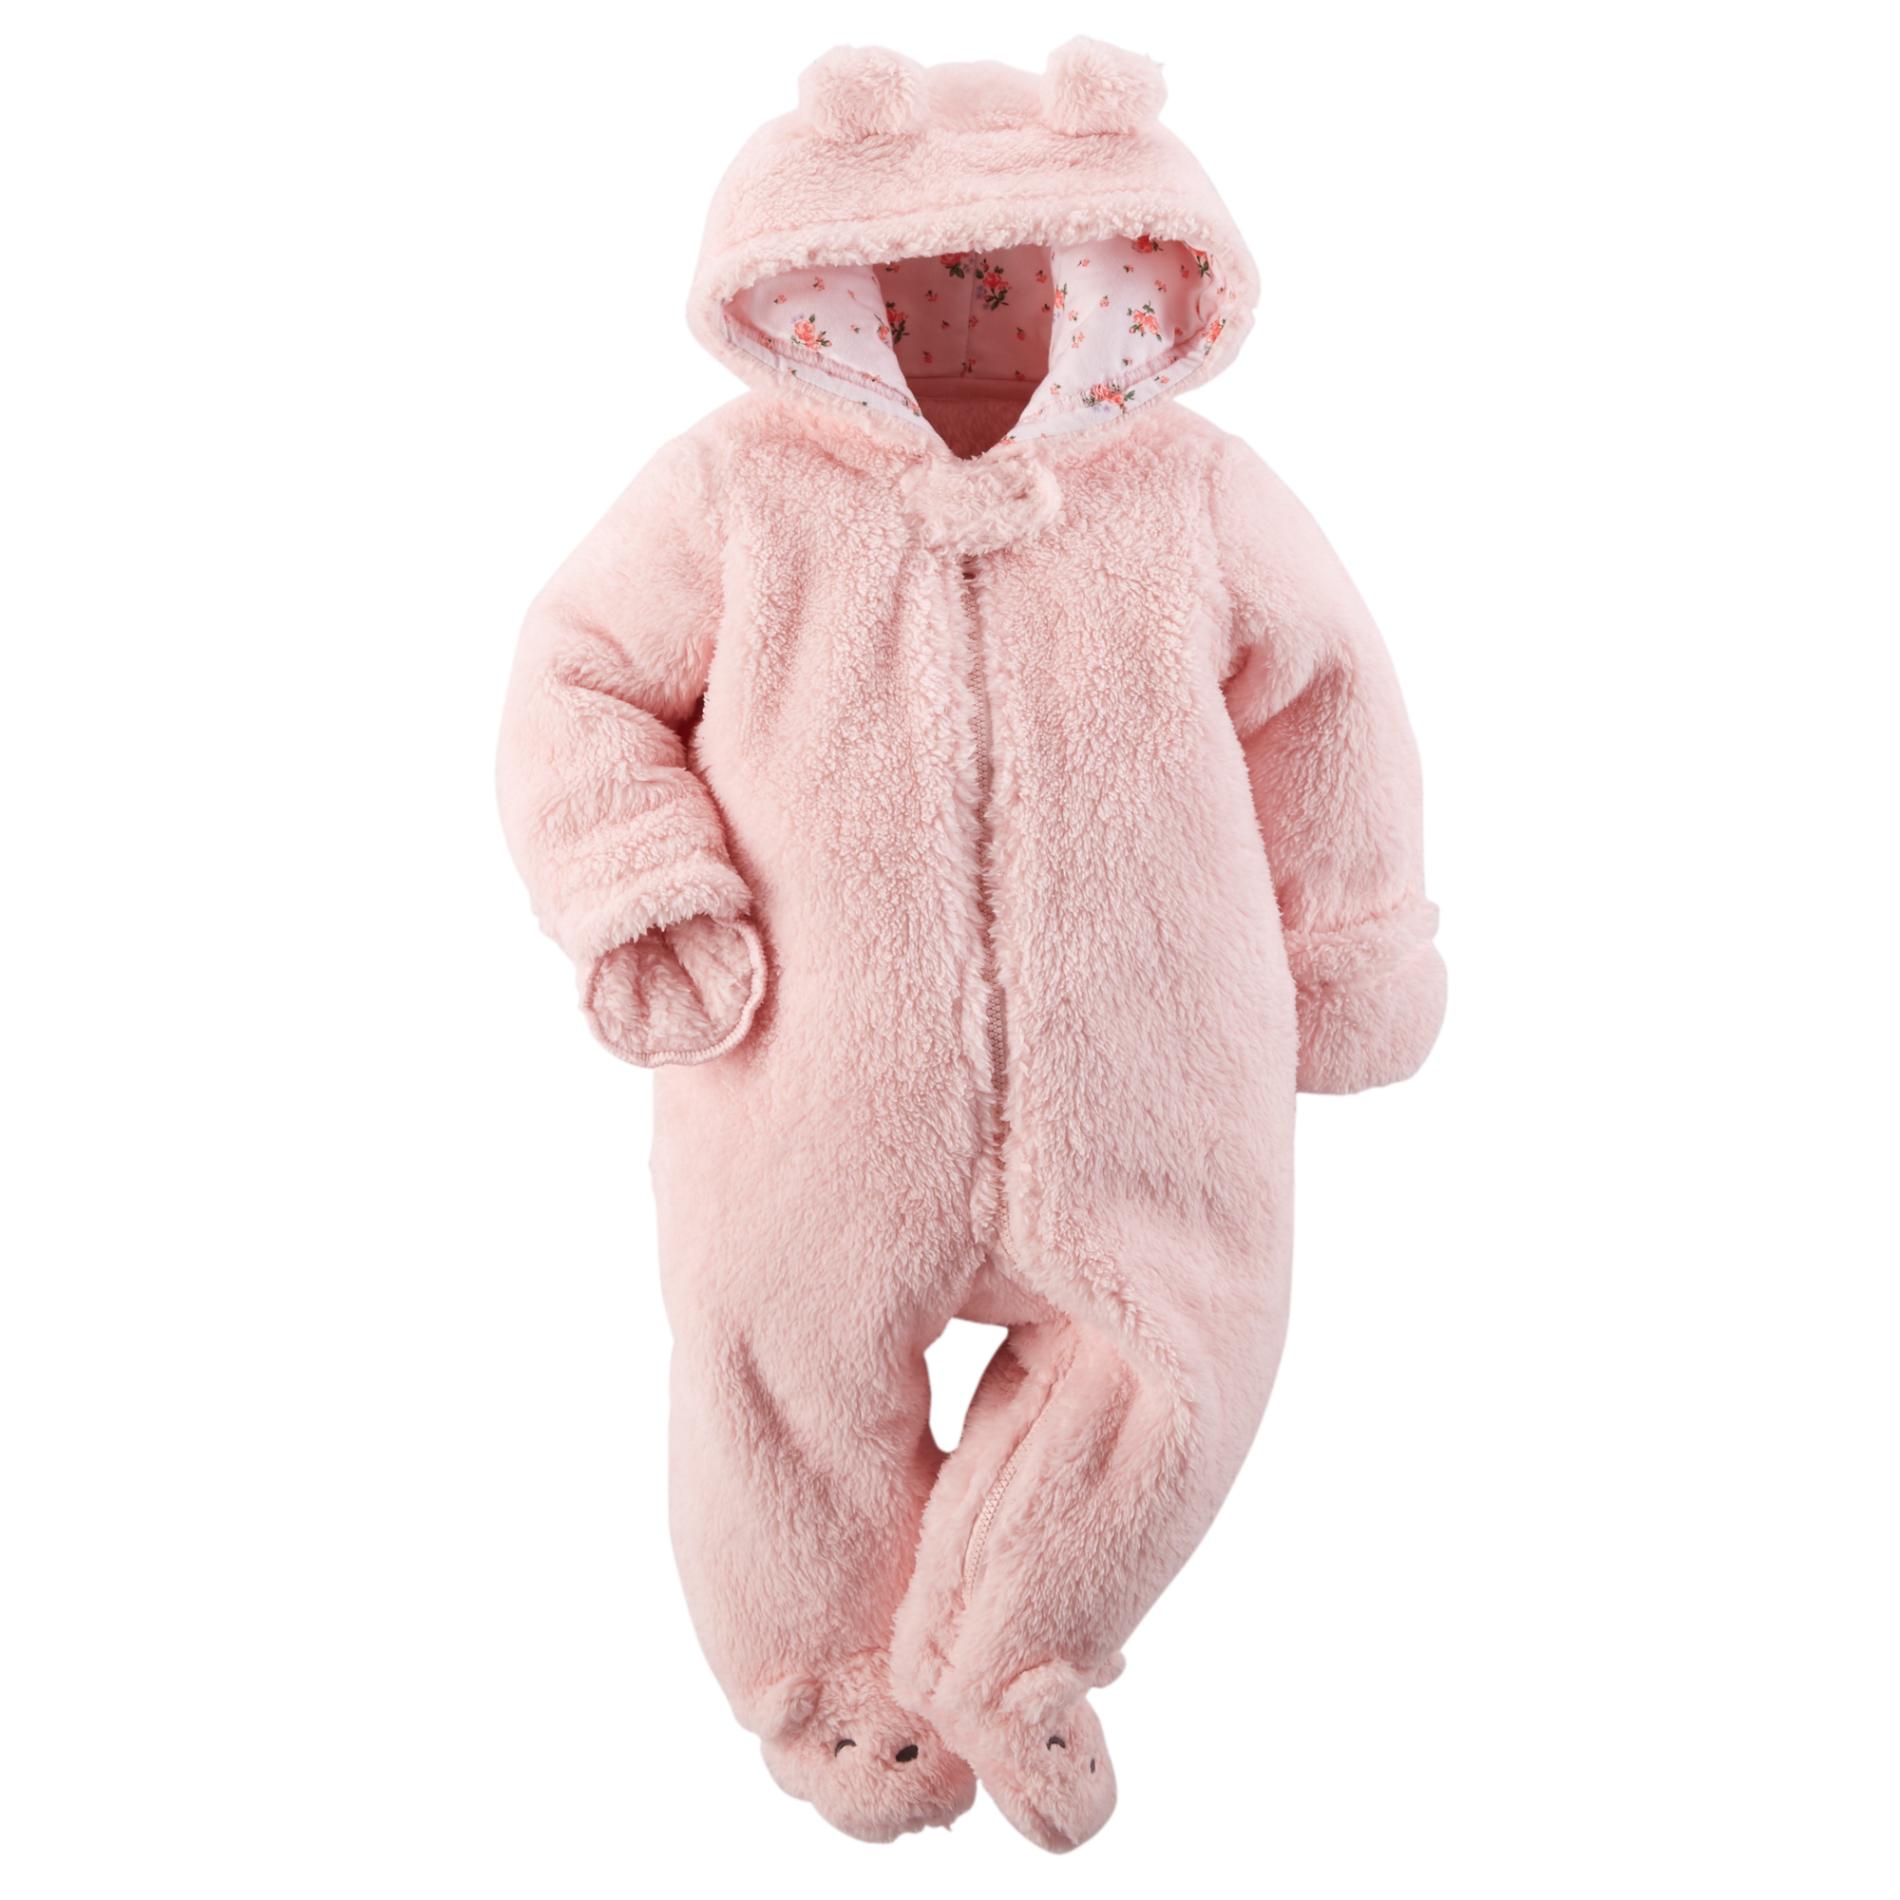 Carter's Newborn Girl's Plush Fleece Hooded Pram Suit